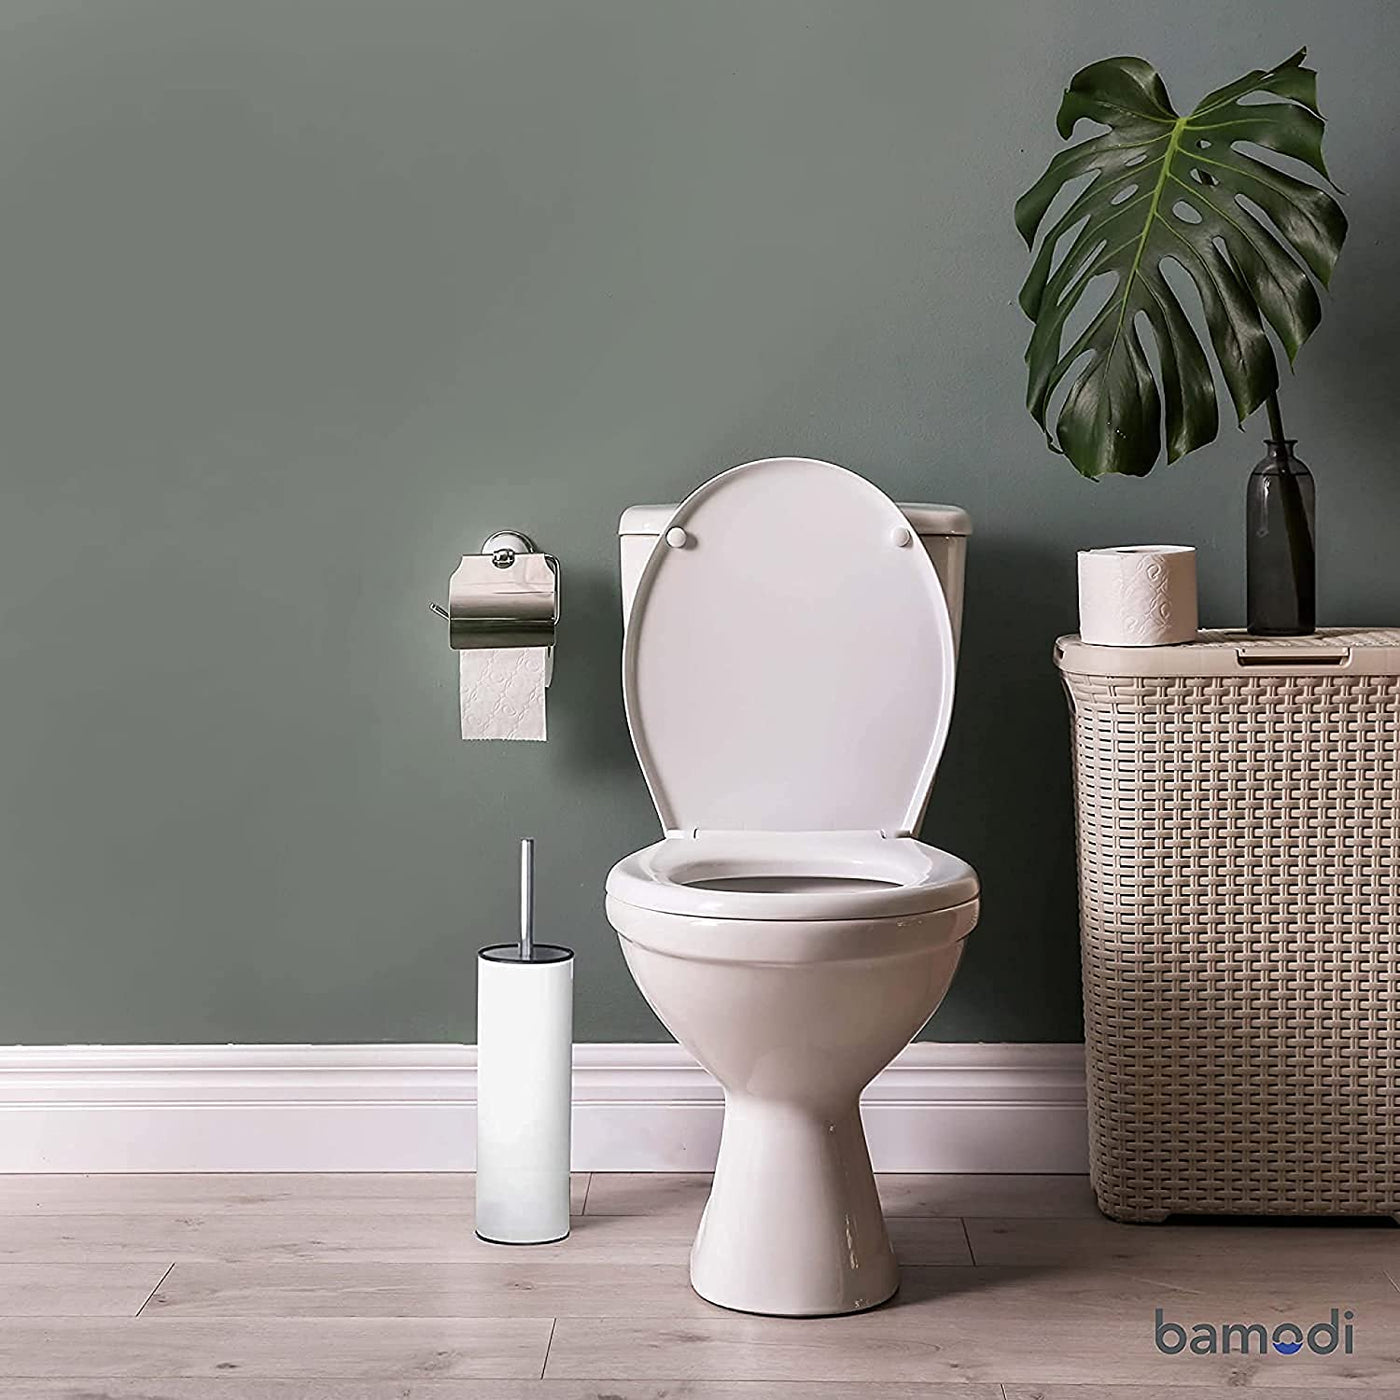 Bamodi Stainless Steel Toilet Brush Set - Elegant and Free Standing